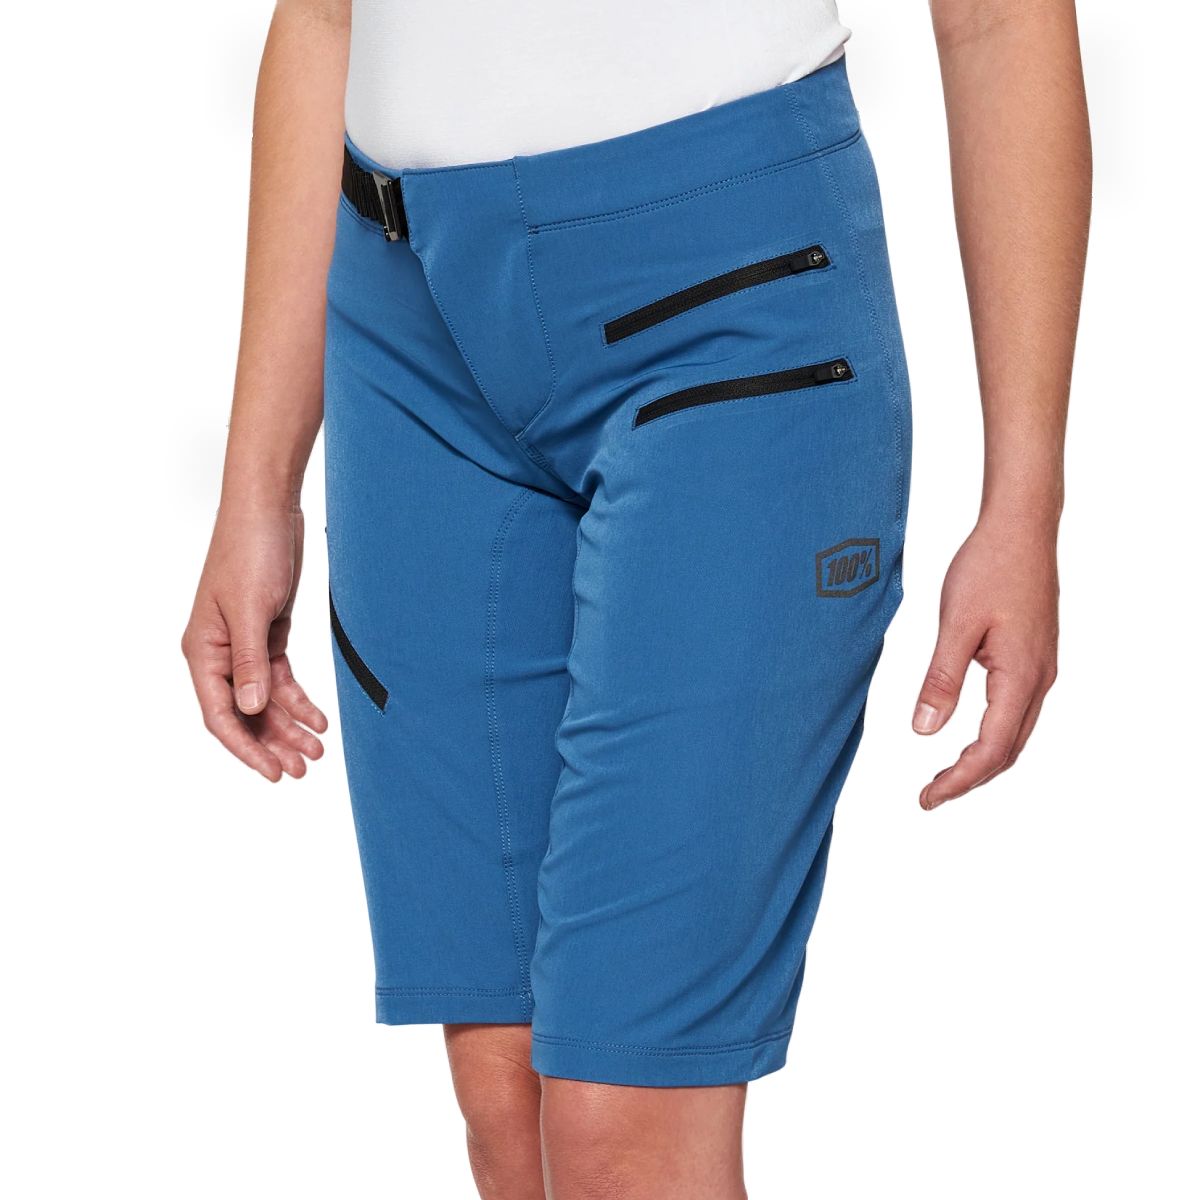 100% Women's Airmatic Shorts Blue - Medium